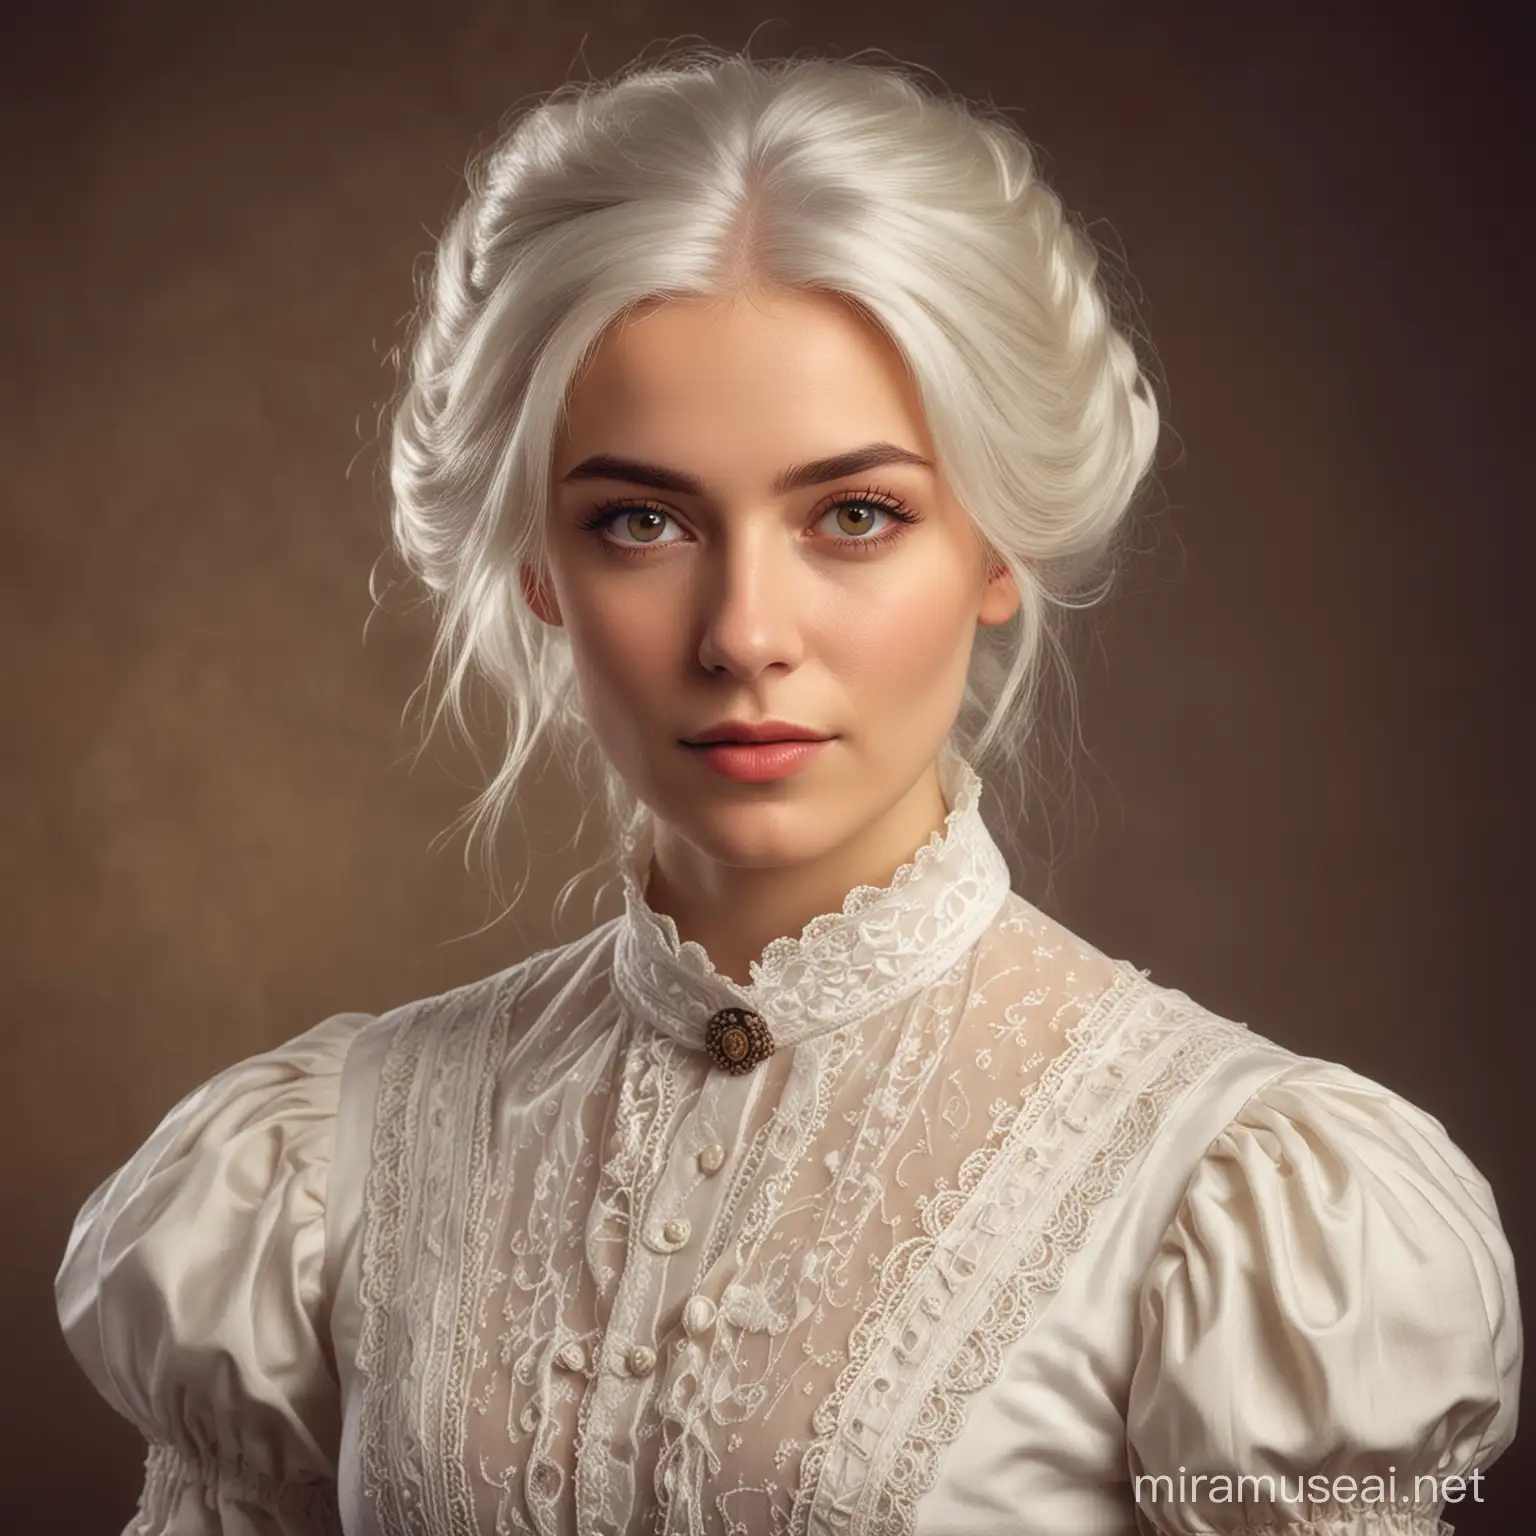 Victorian Style Portrait of Elegant European Women with Almond Eyes and White Hair